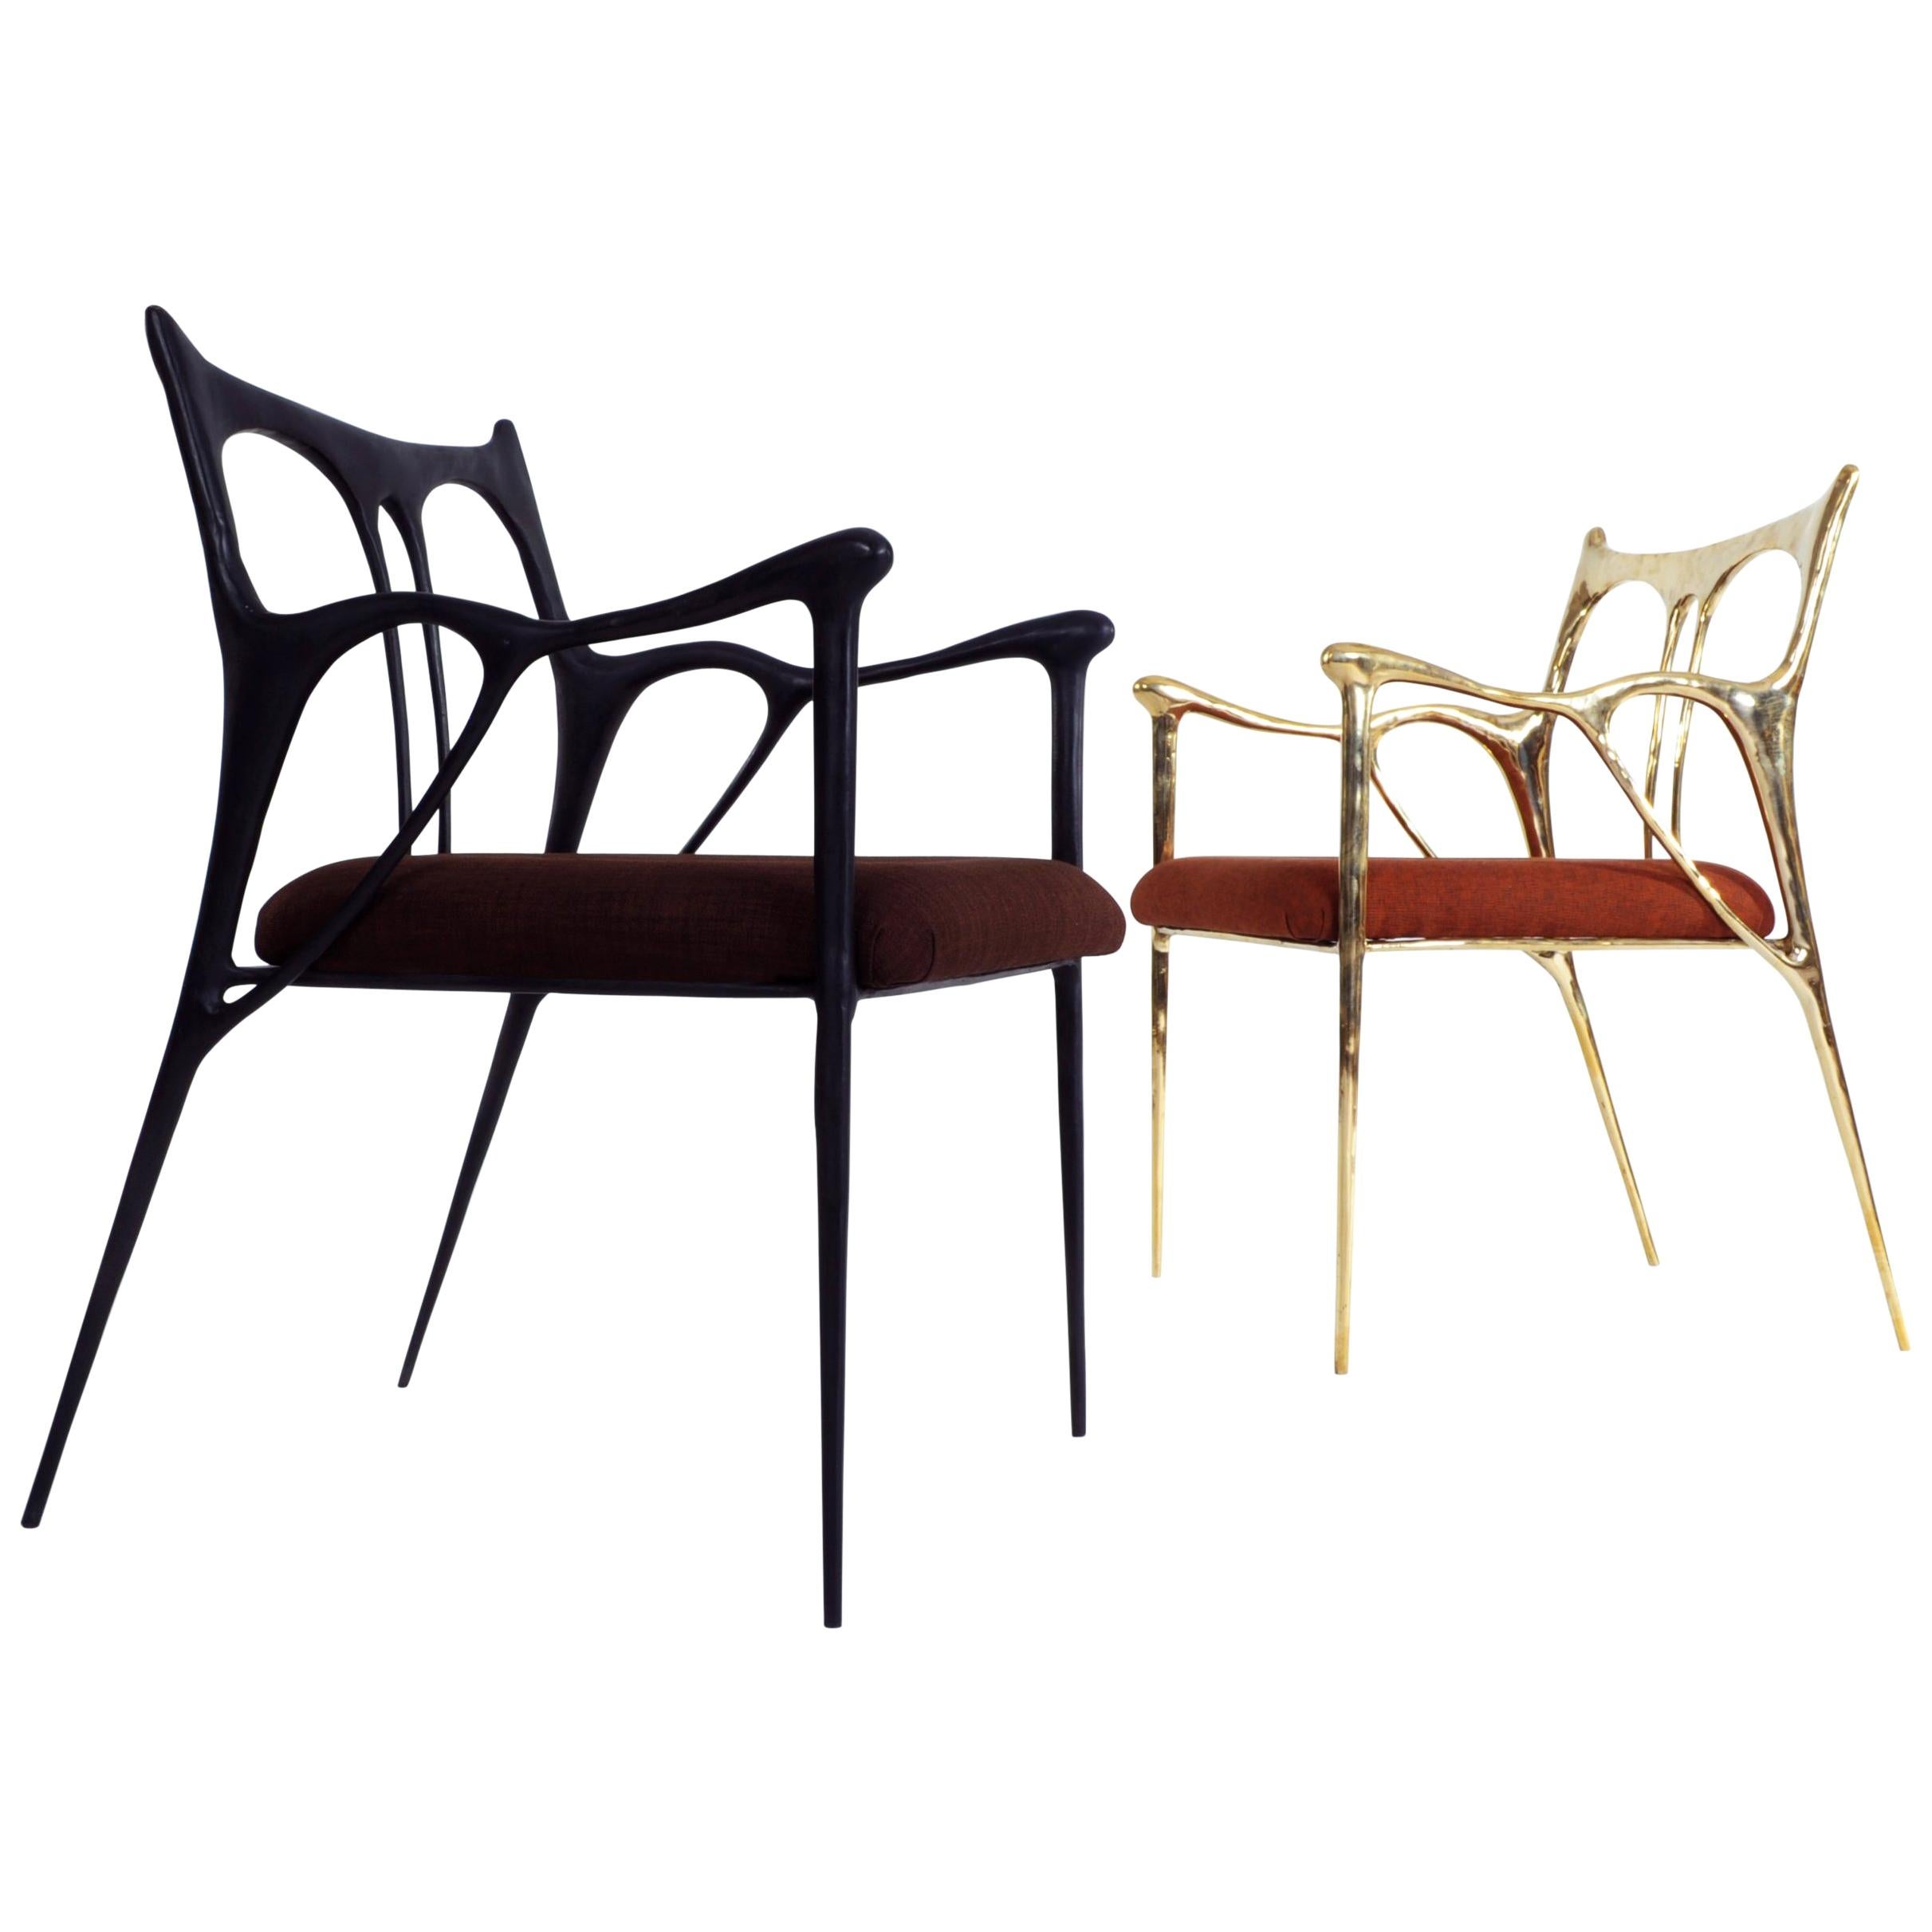 Post-Modern Pair of Sculpted Brass Chairs, Misaya